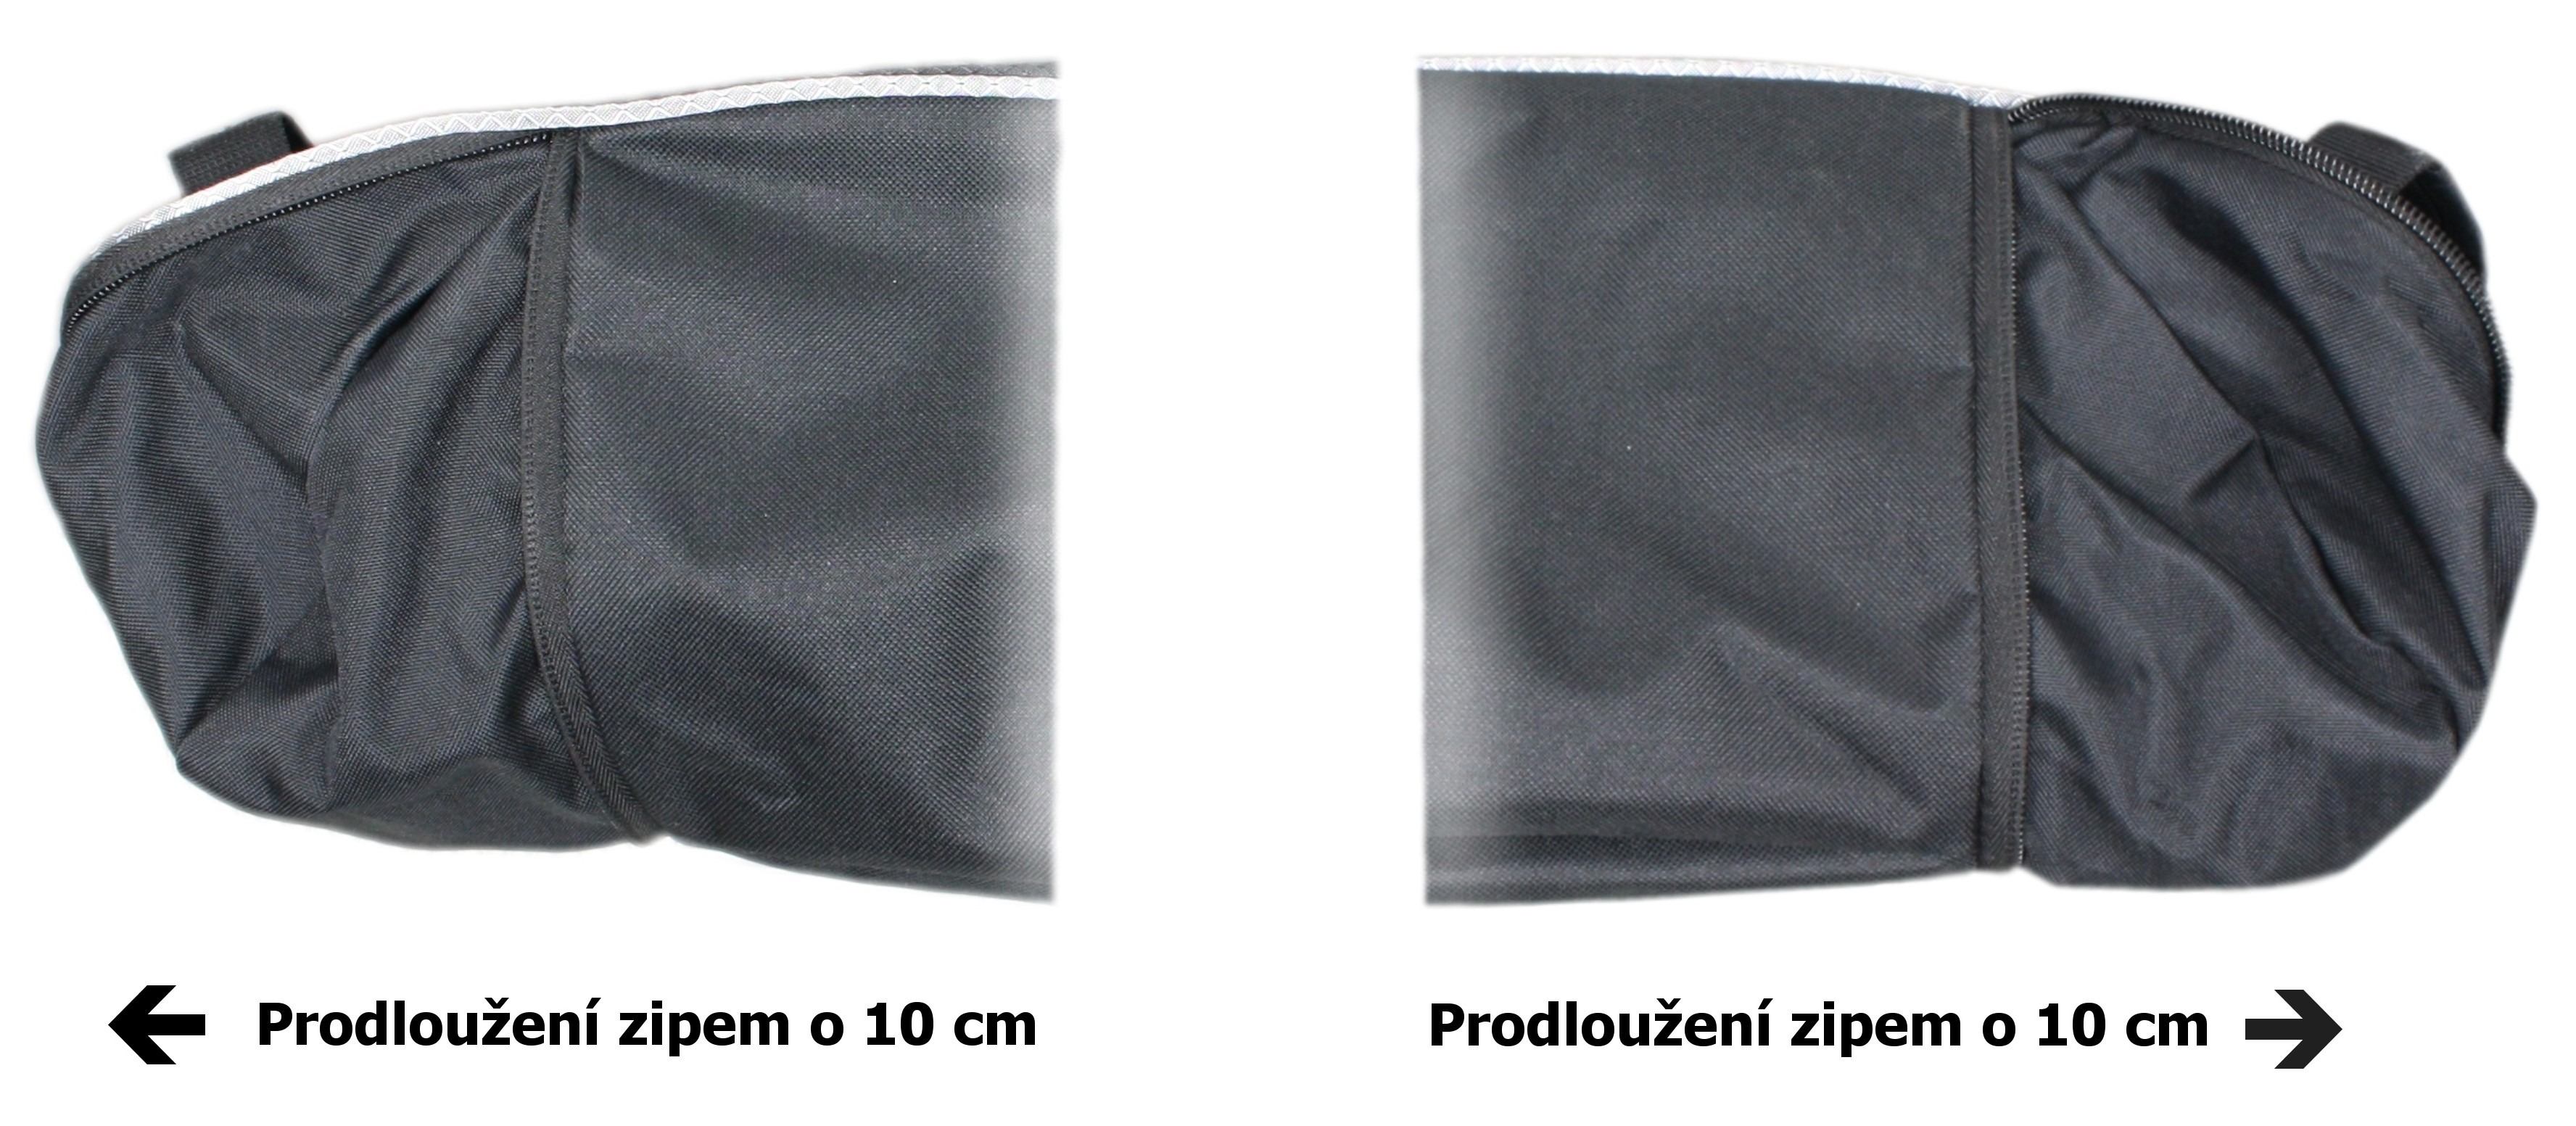 Ski bag for 1 pair, black/silver, 160-180 cm